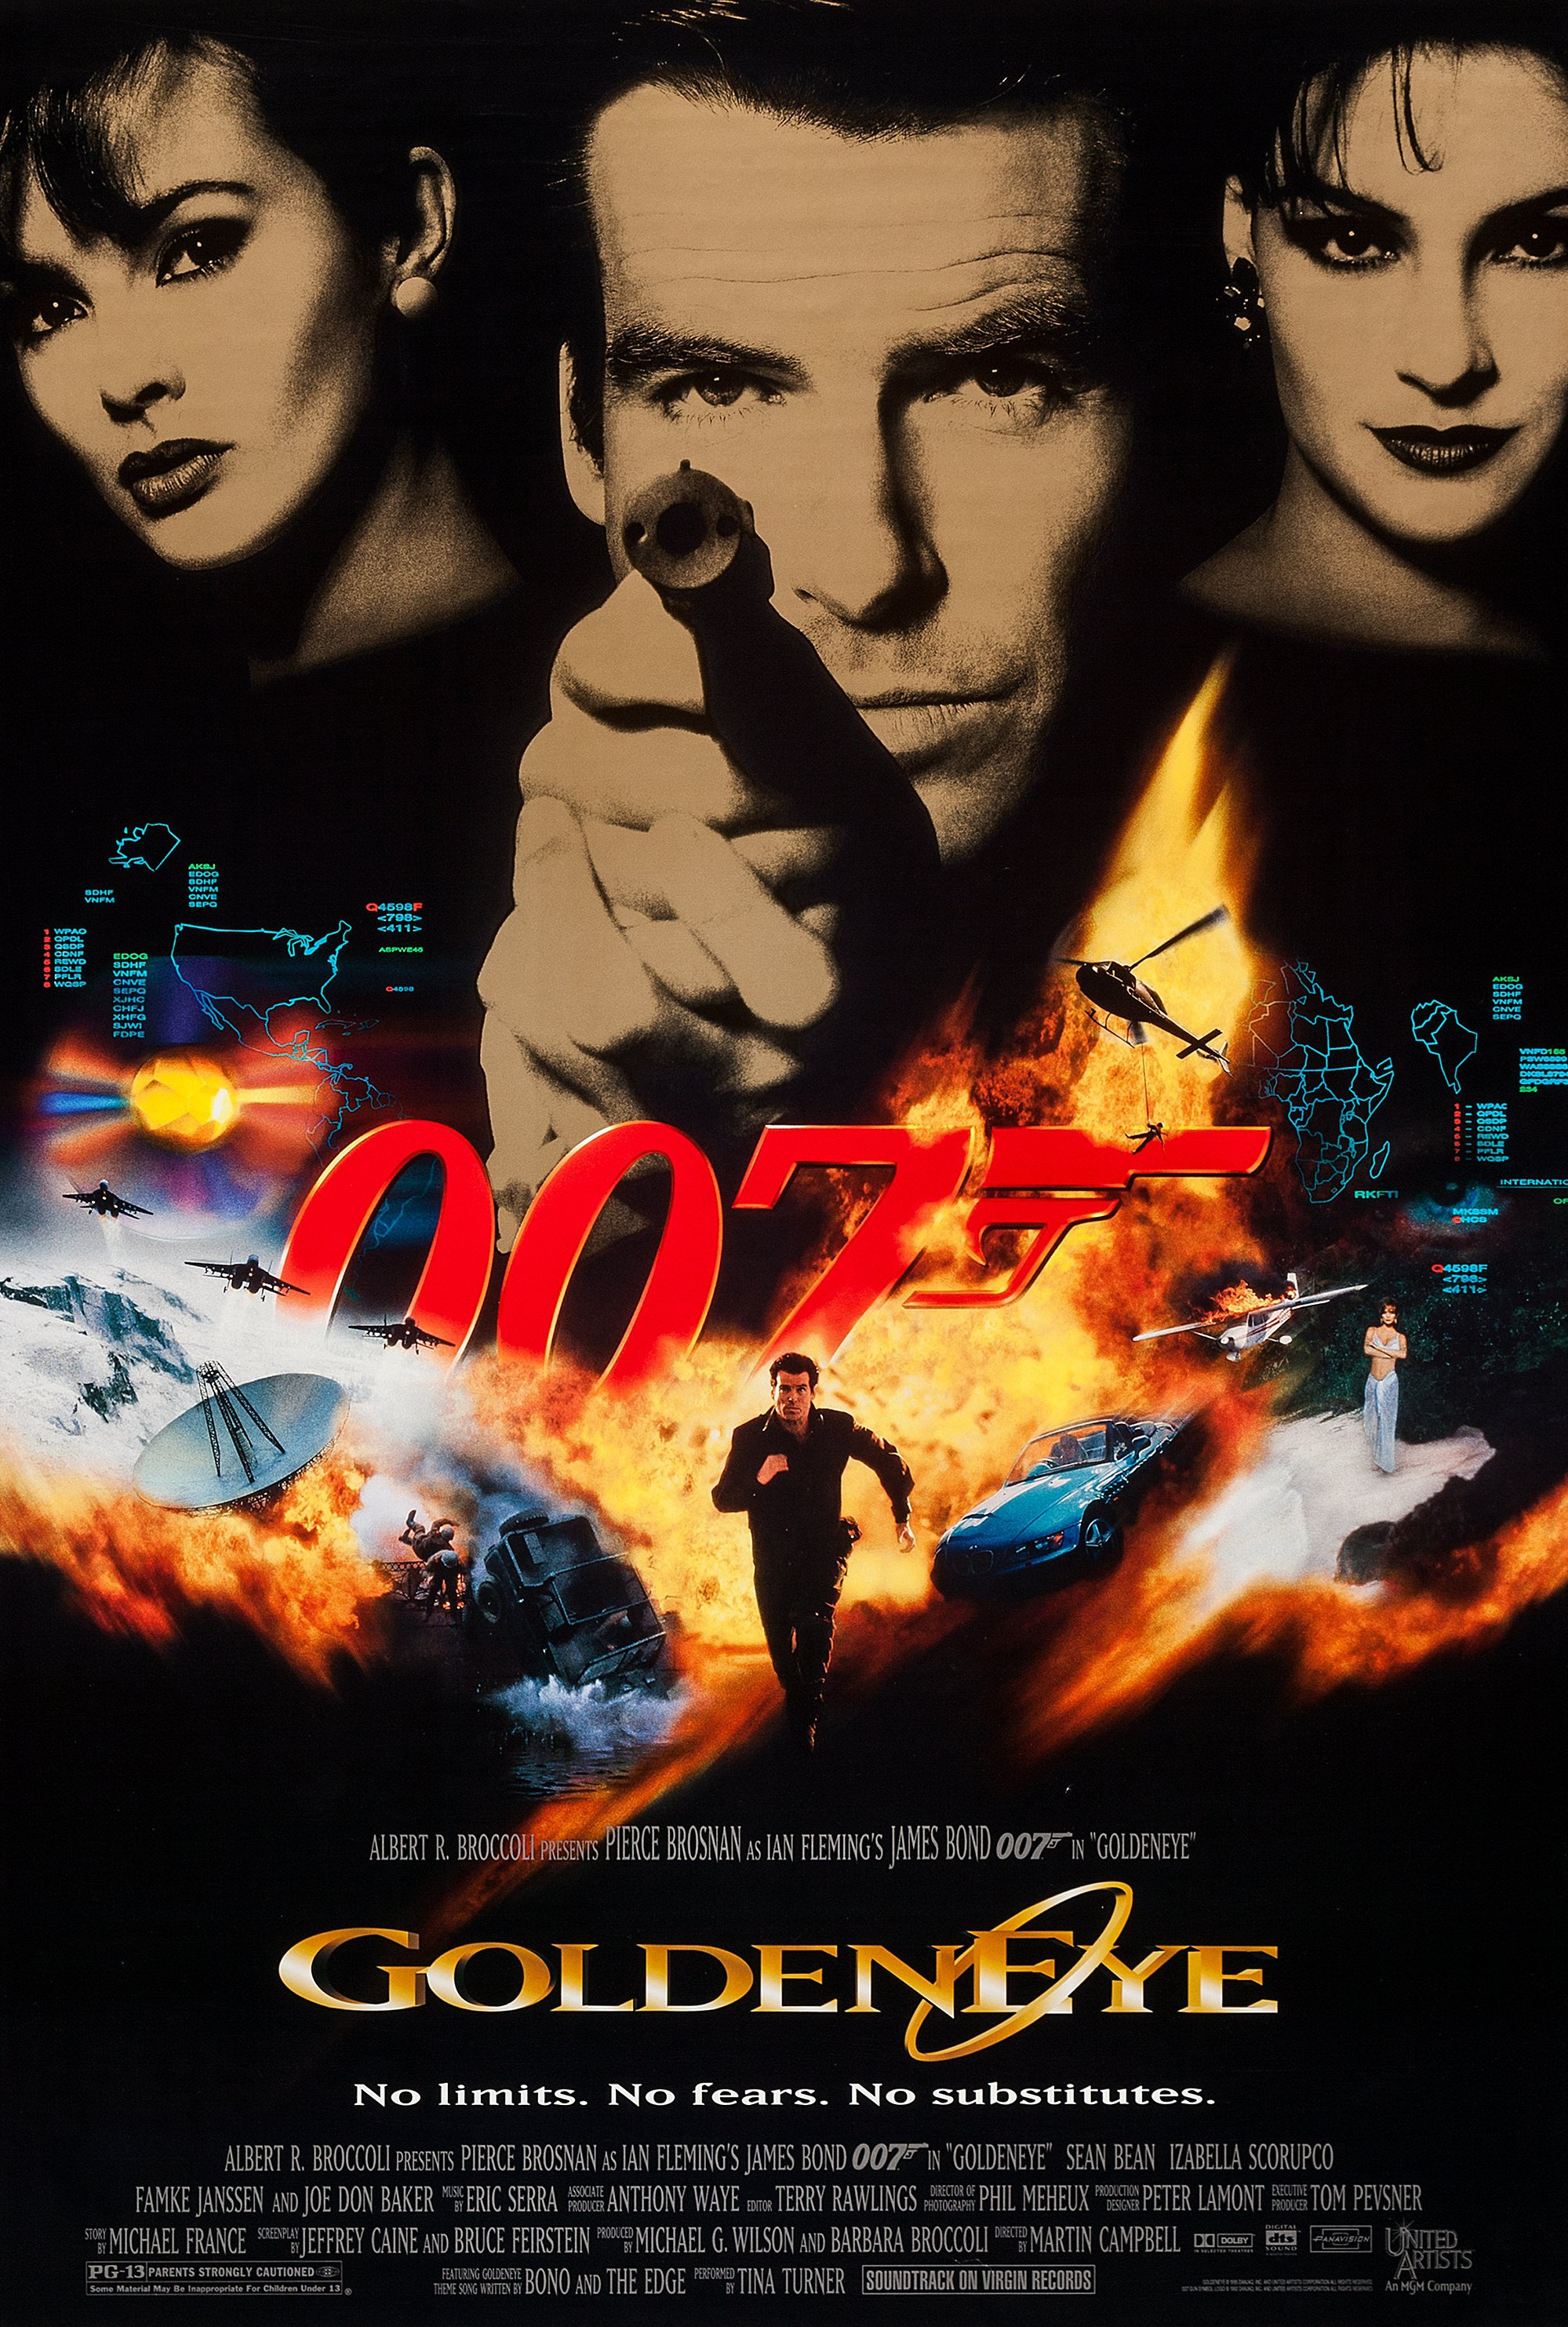 Activision James Bond 007: GoldenEye (Nintendo Wii)